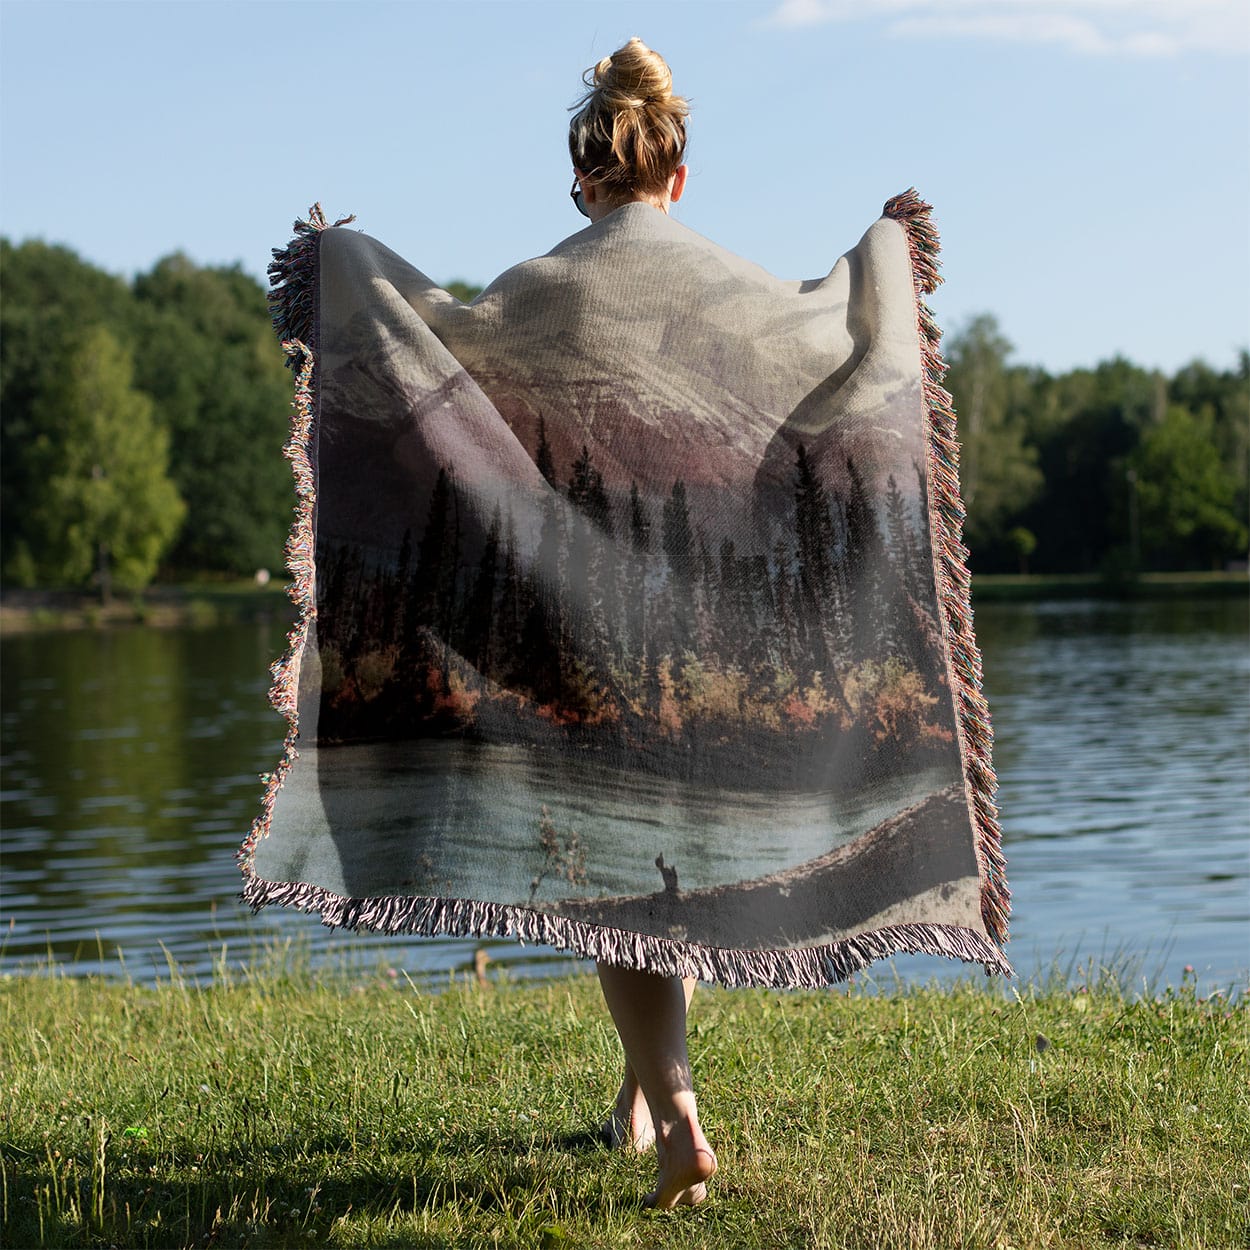 Beautiful Mountain Woven Blanket Held on a Woman's Back Outside